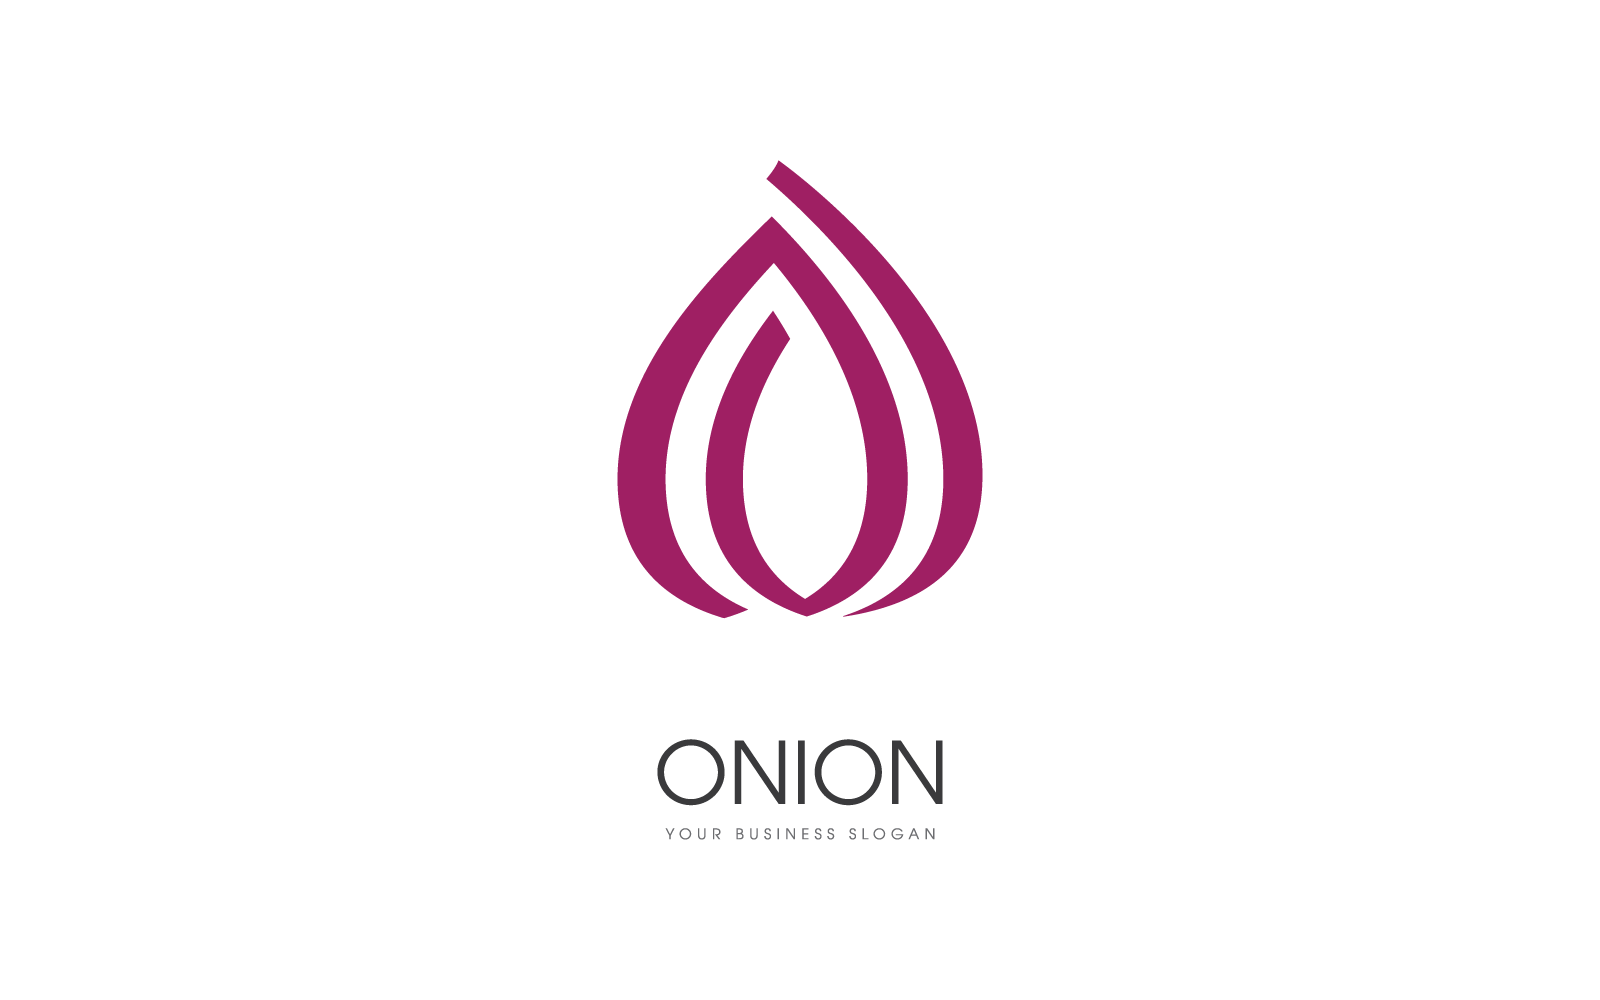 Onion on white background vector illustration design